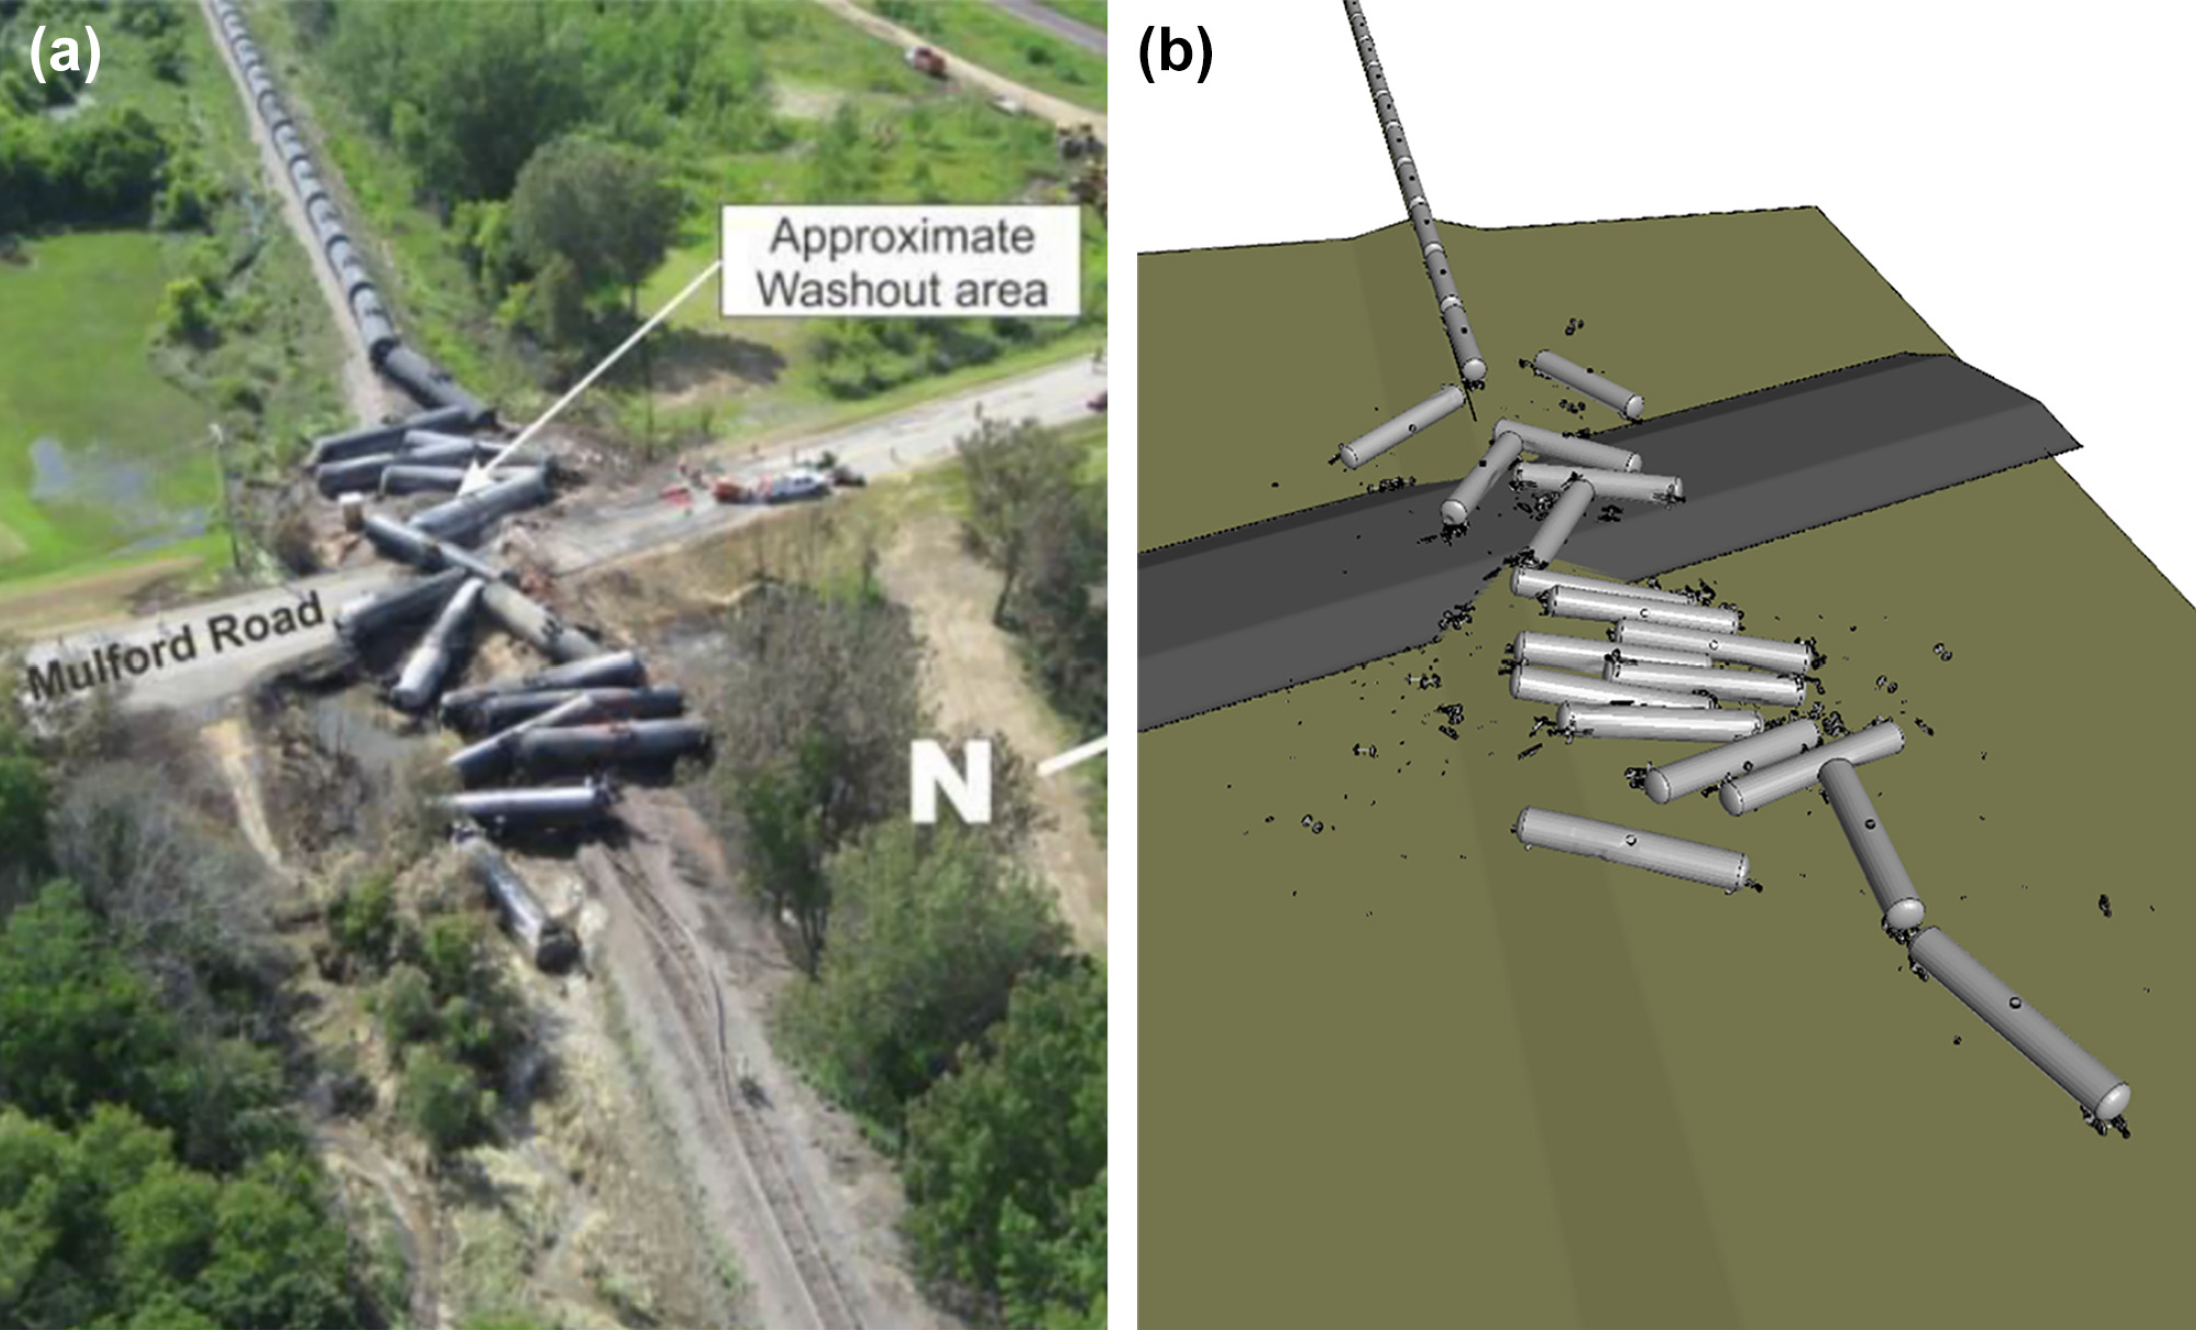 Comparison of simulated derailment with actual derailment